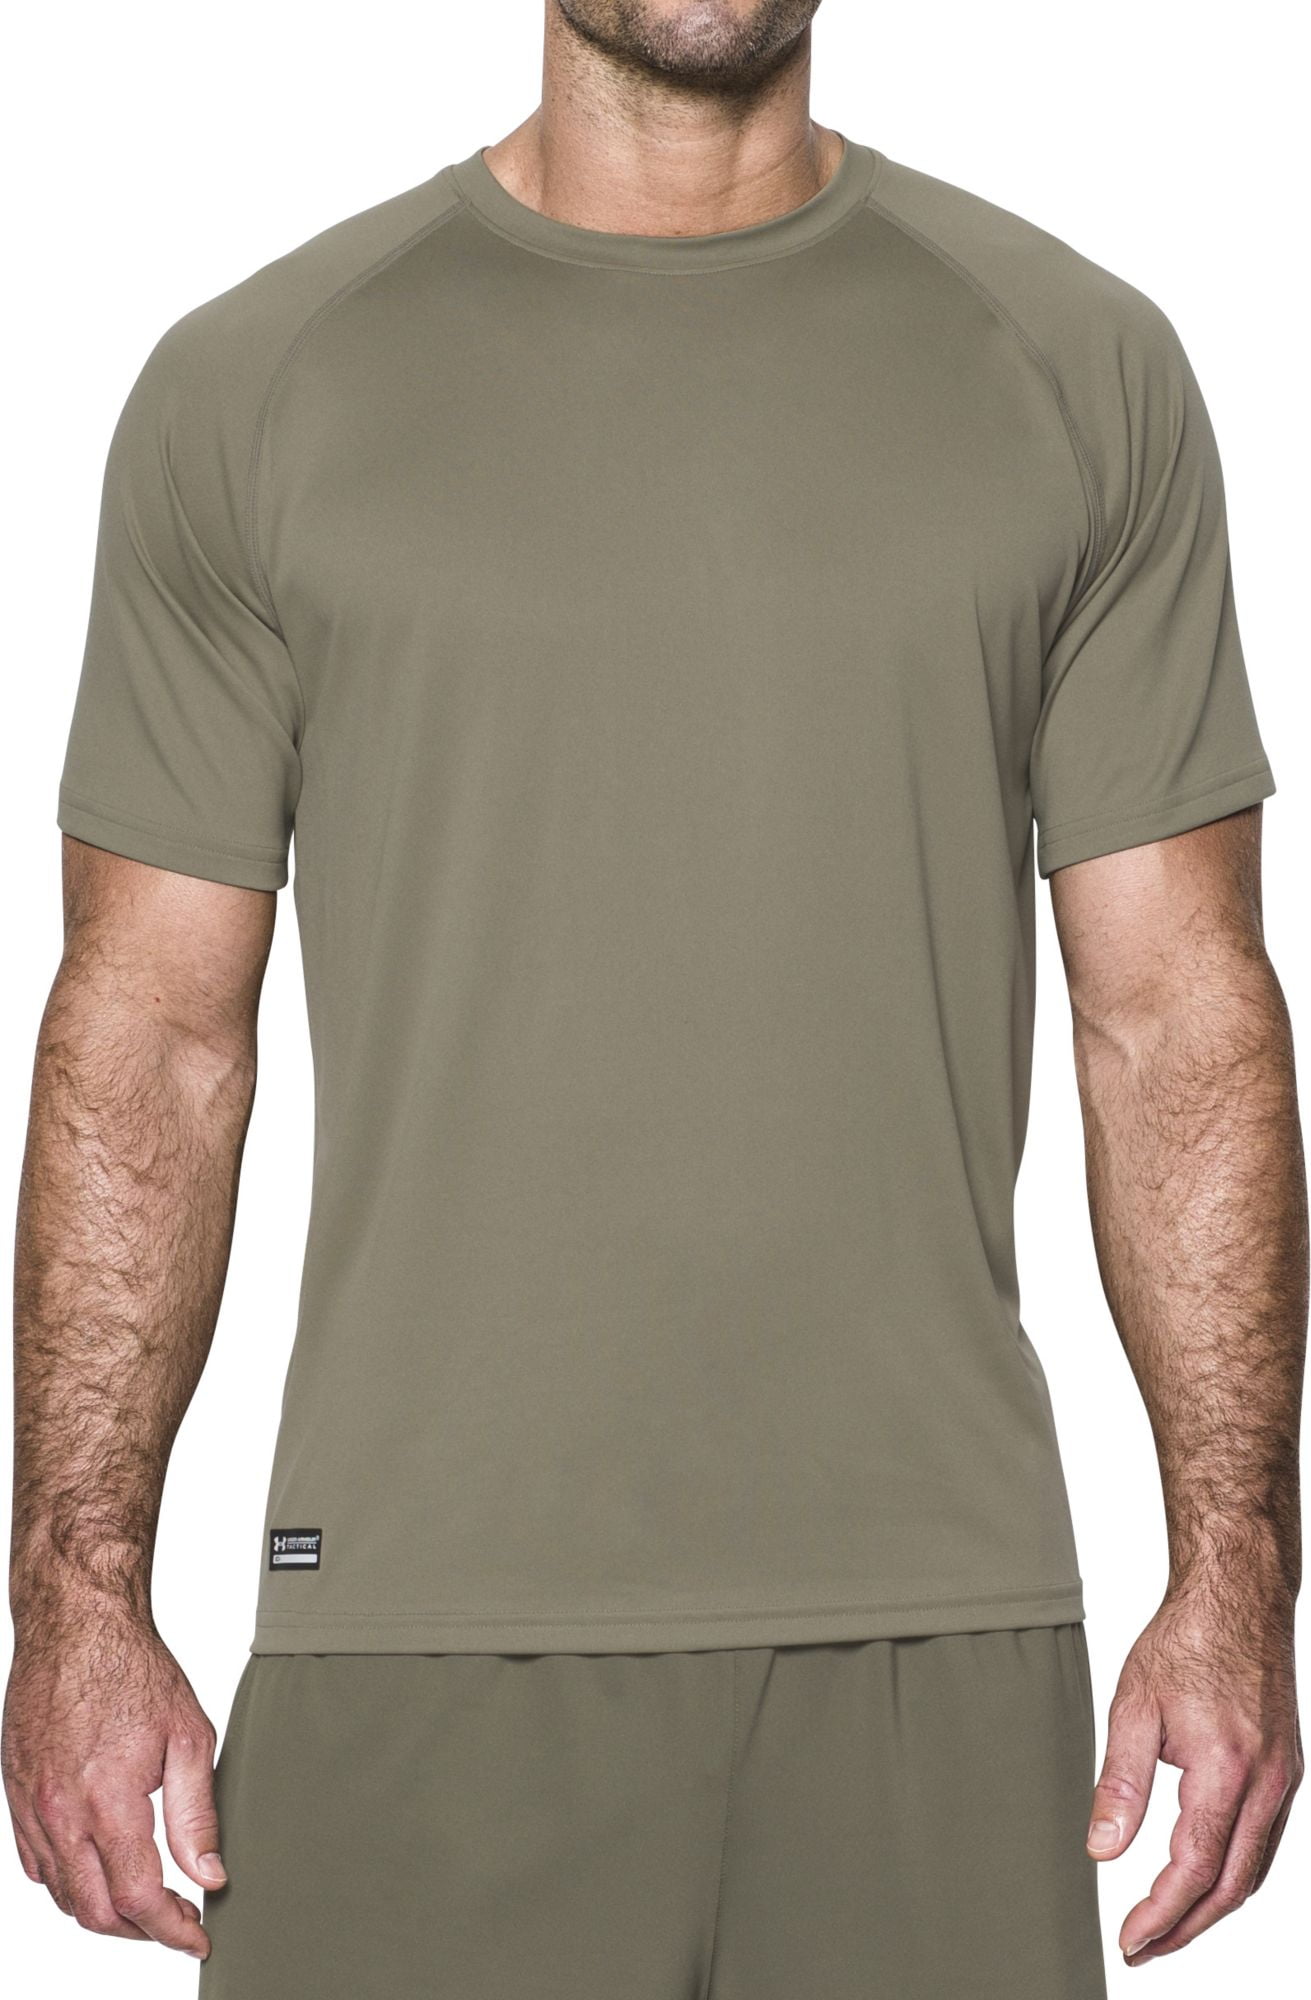 Under Armour - UNDER ARMOUR UA Tactical Tech T-Shirt - Federal Tan - 3X-Large - Walmart.com 